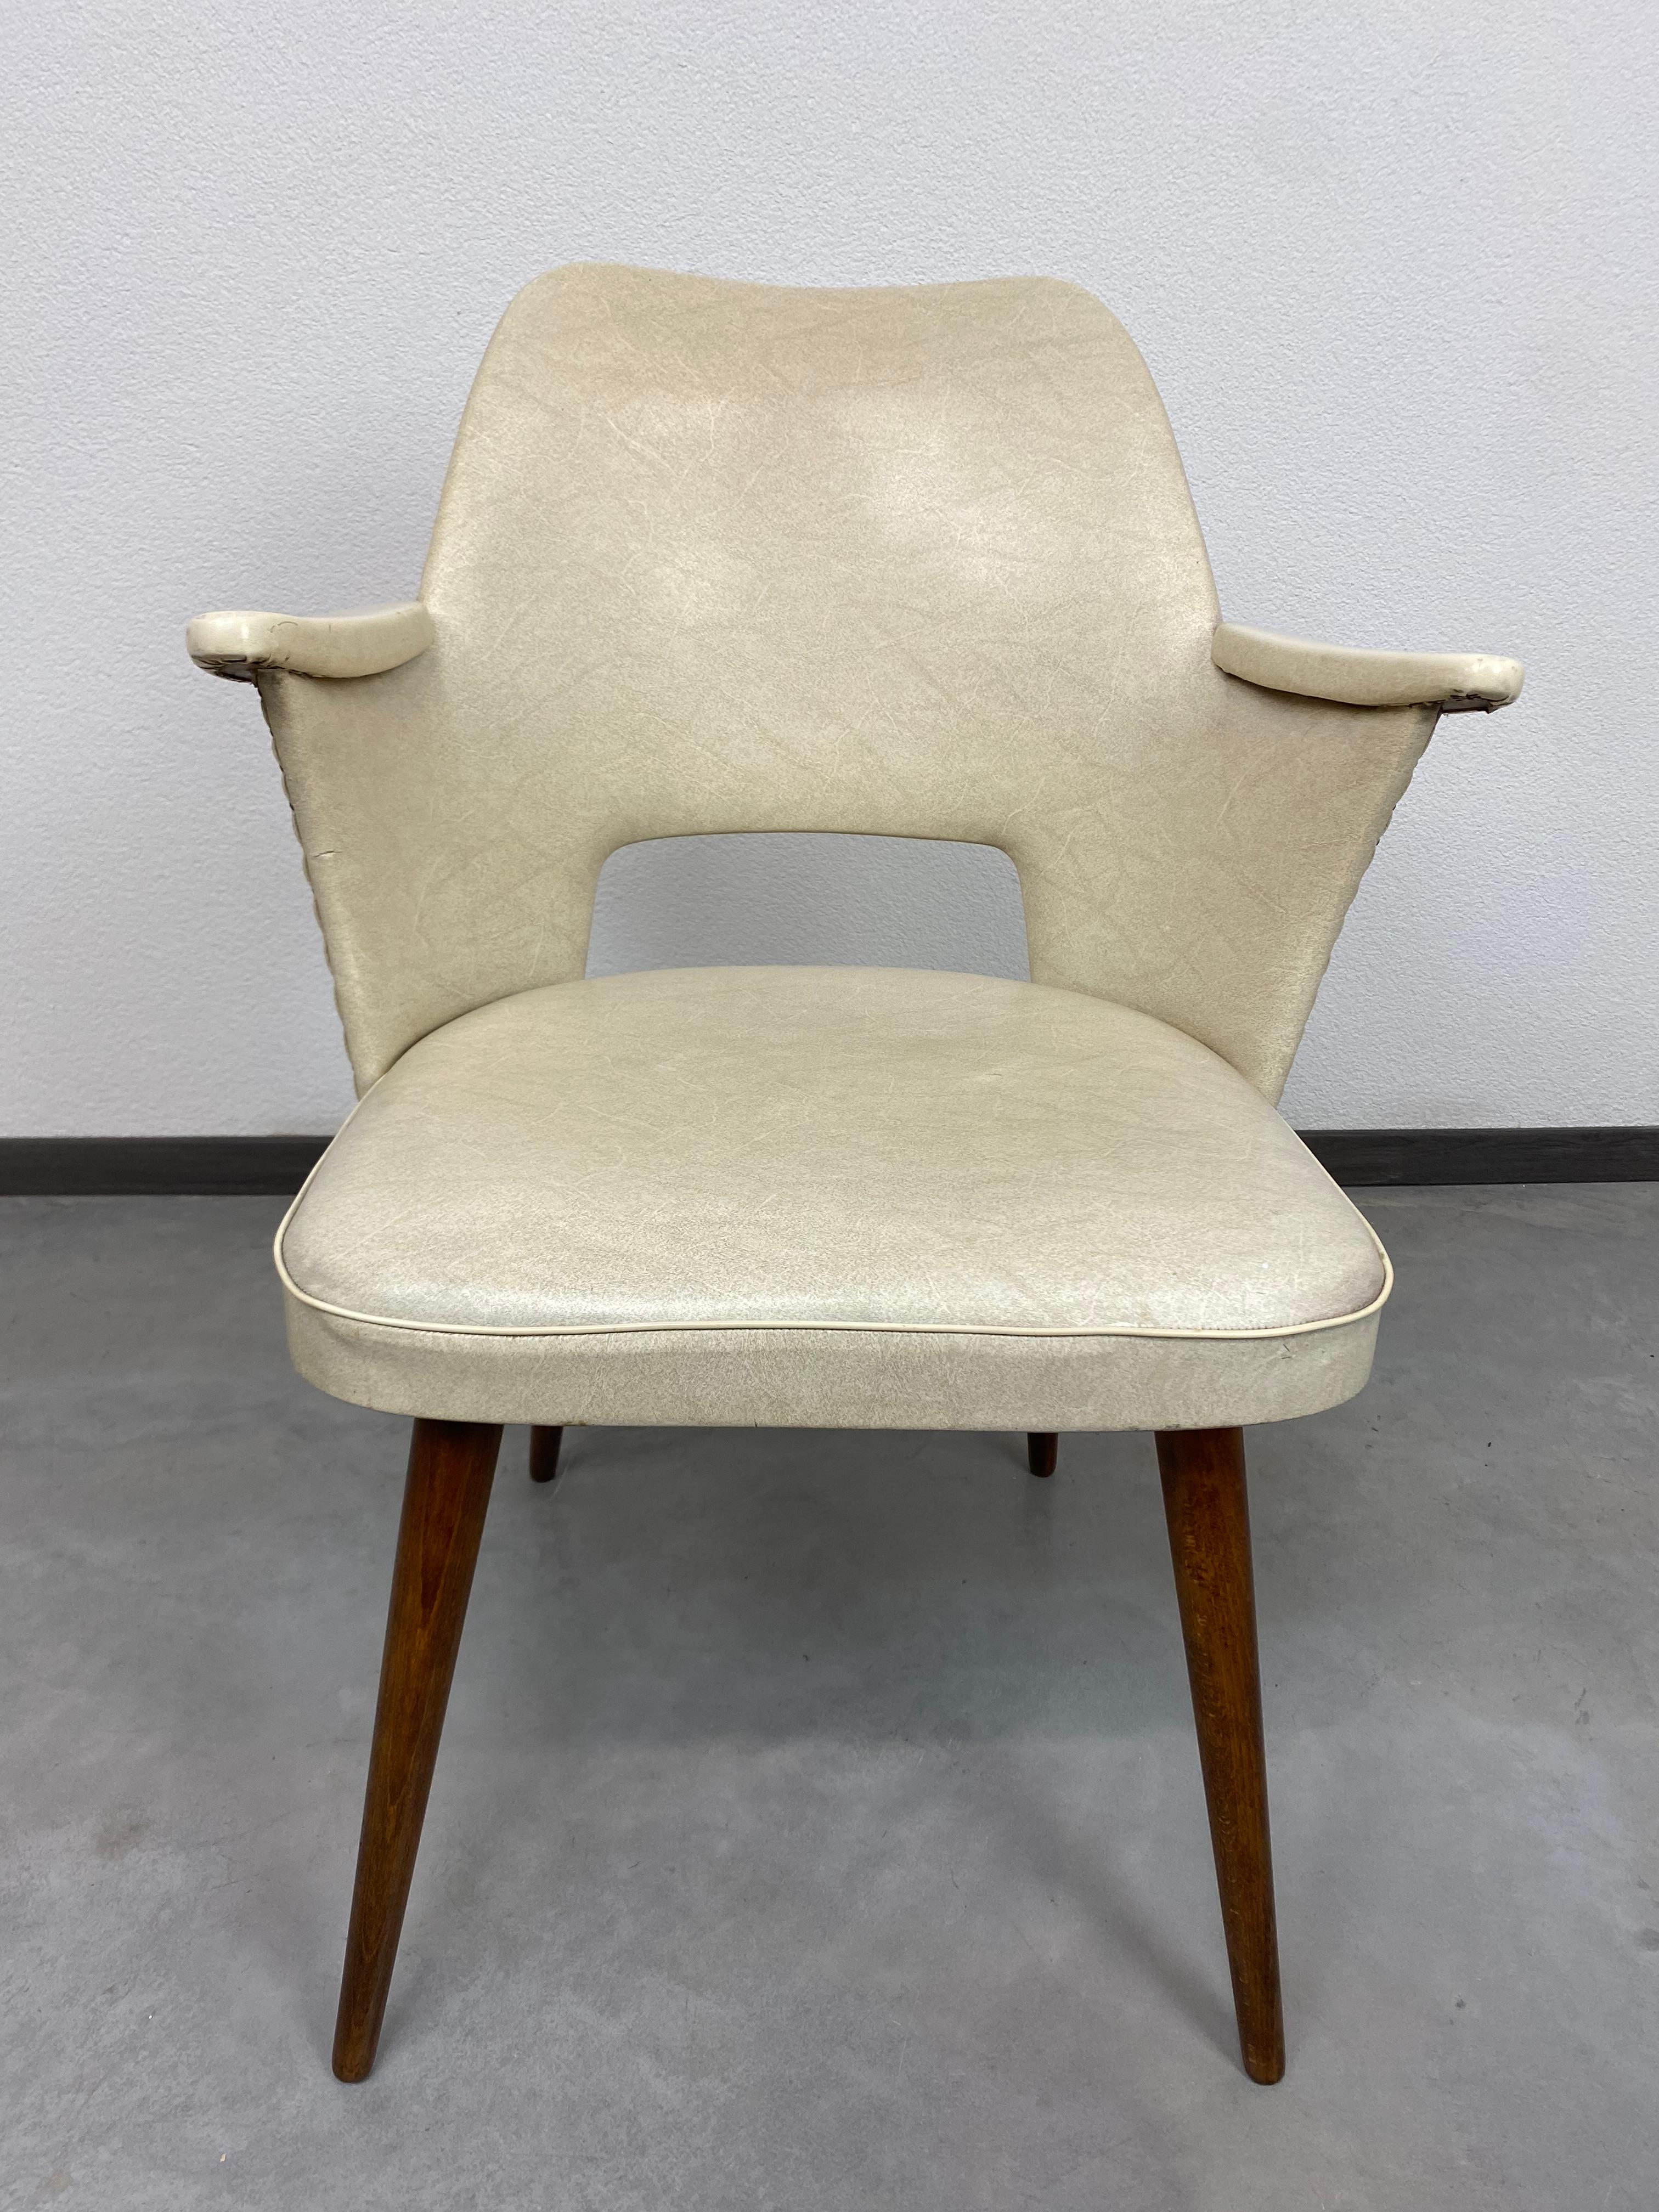 Czech Mid-Century Design Chair No.515 by Oswald Haerdtl for Thonet For Sale